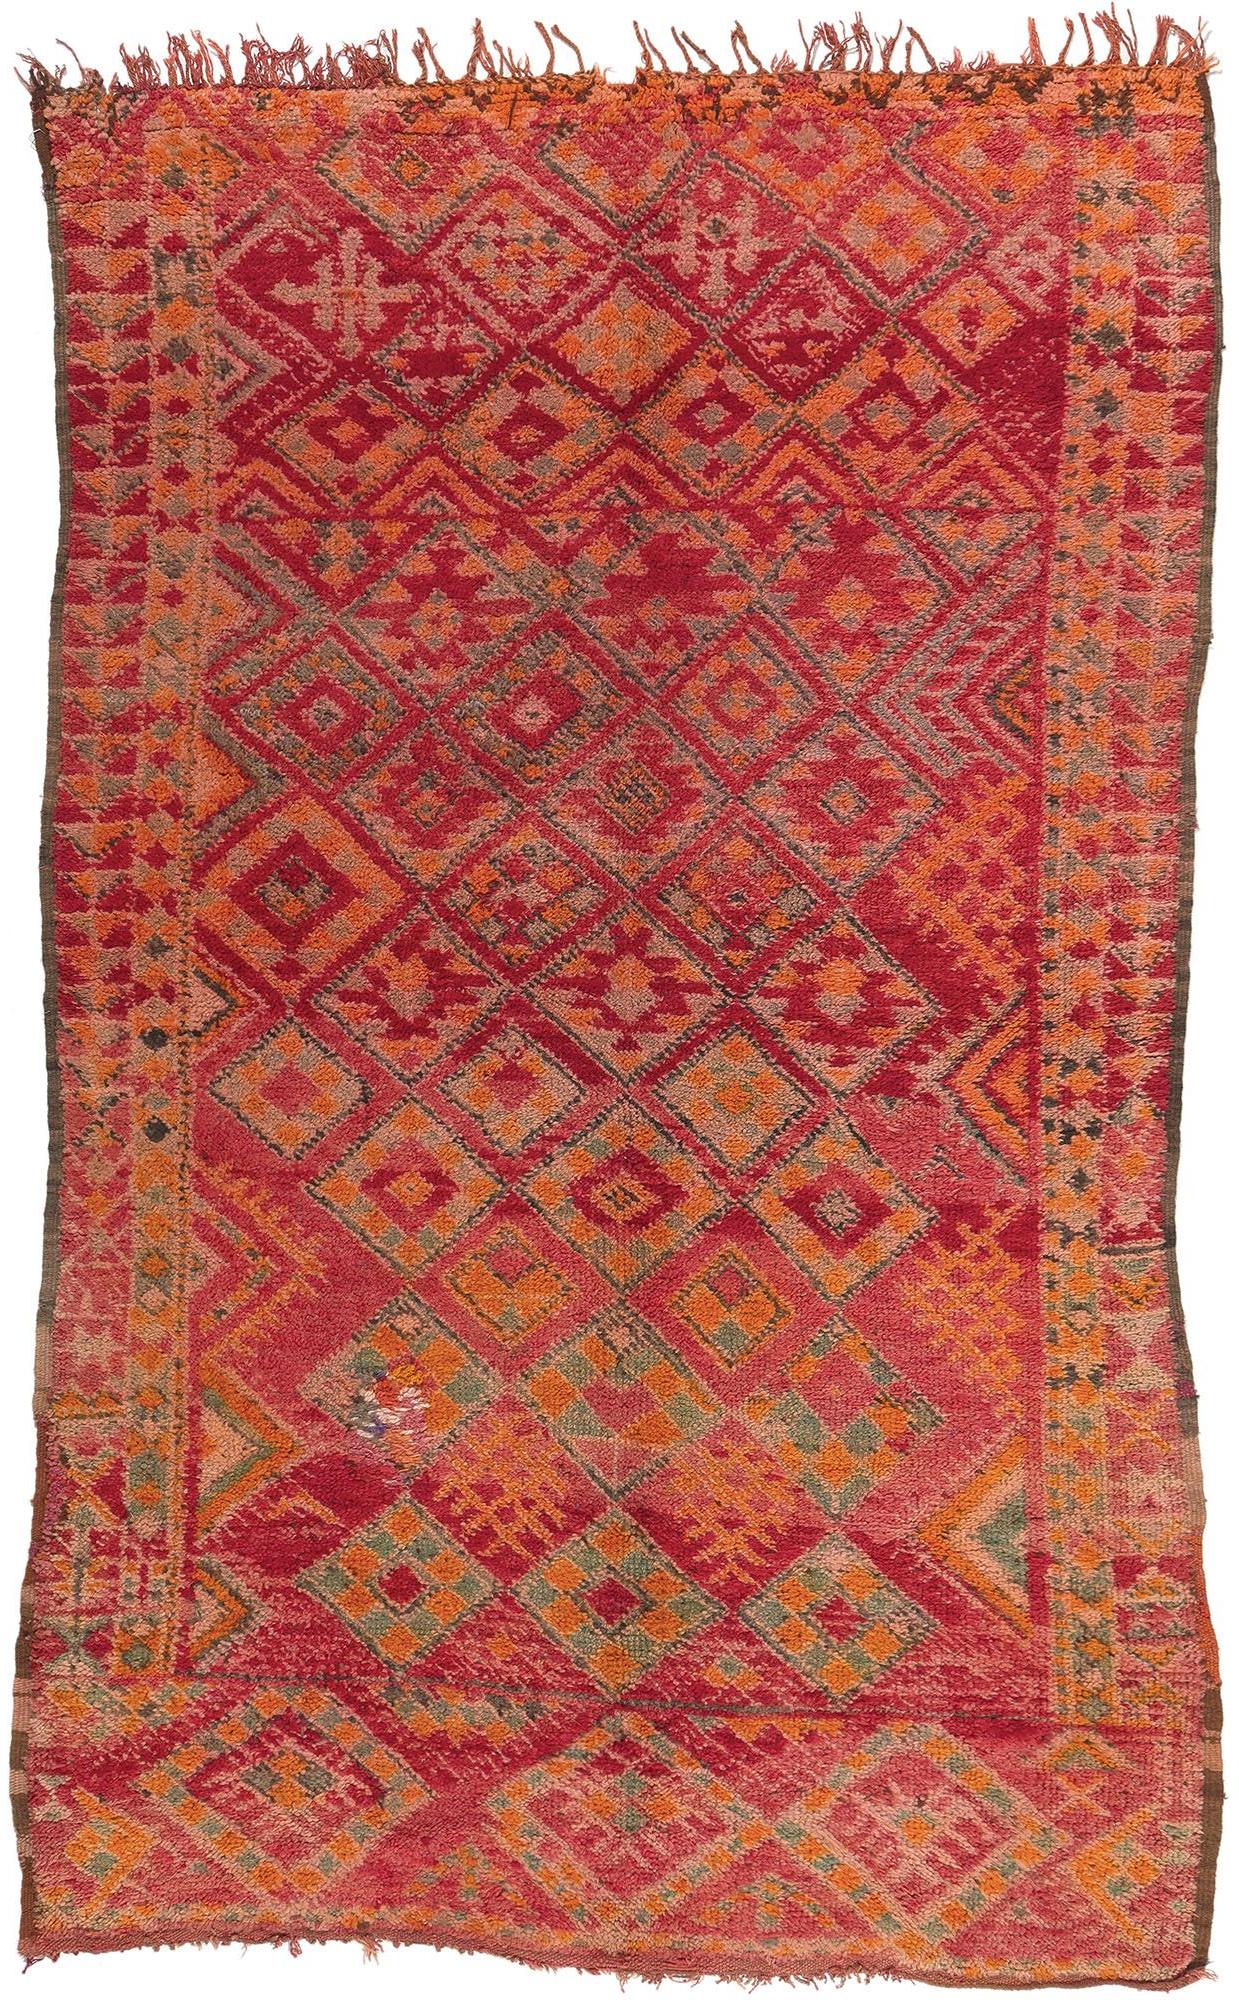 Vintage Talsint Moroccan Rug, Boho Jungalow Meets Nomadic Charm For Sale